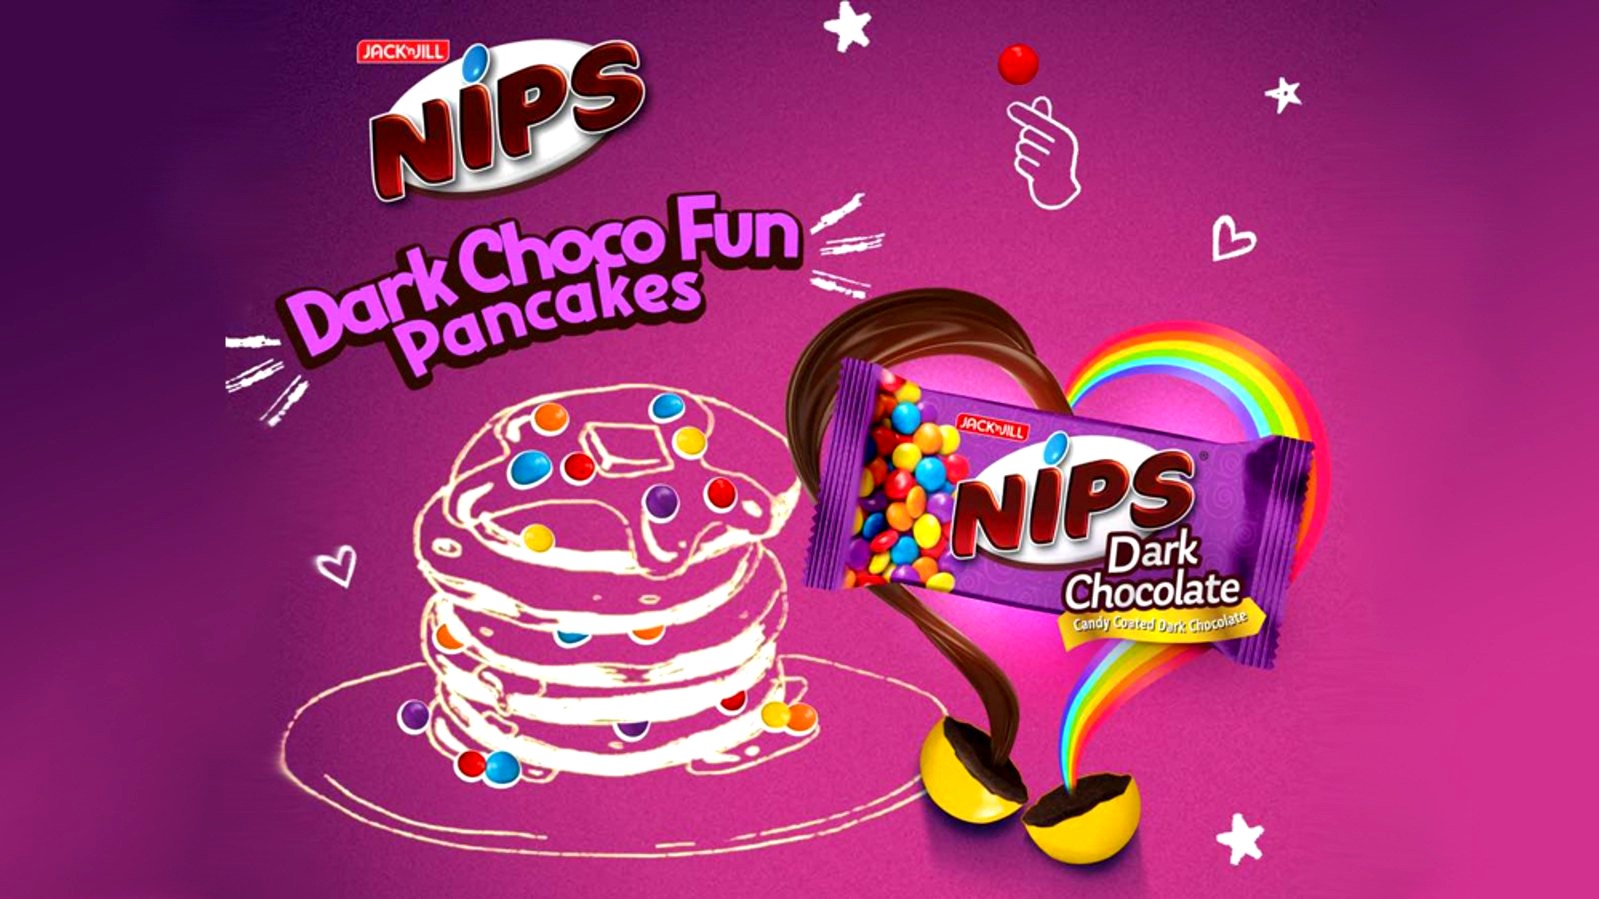 Image of Nips Dark Choco Fun Pancakes